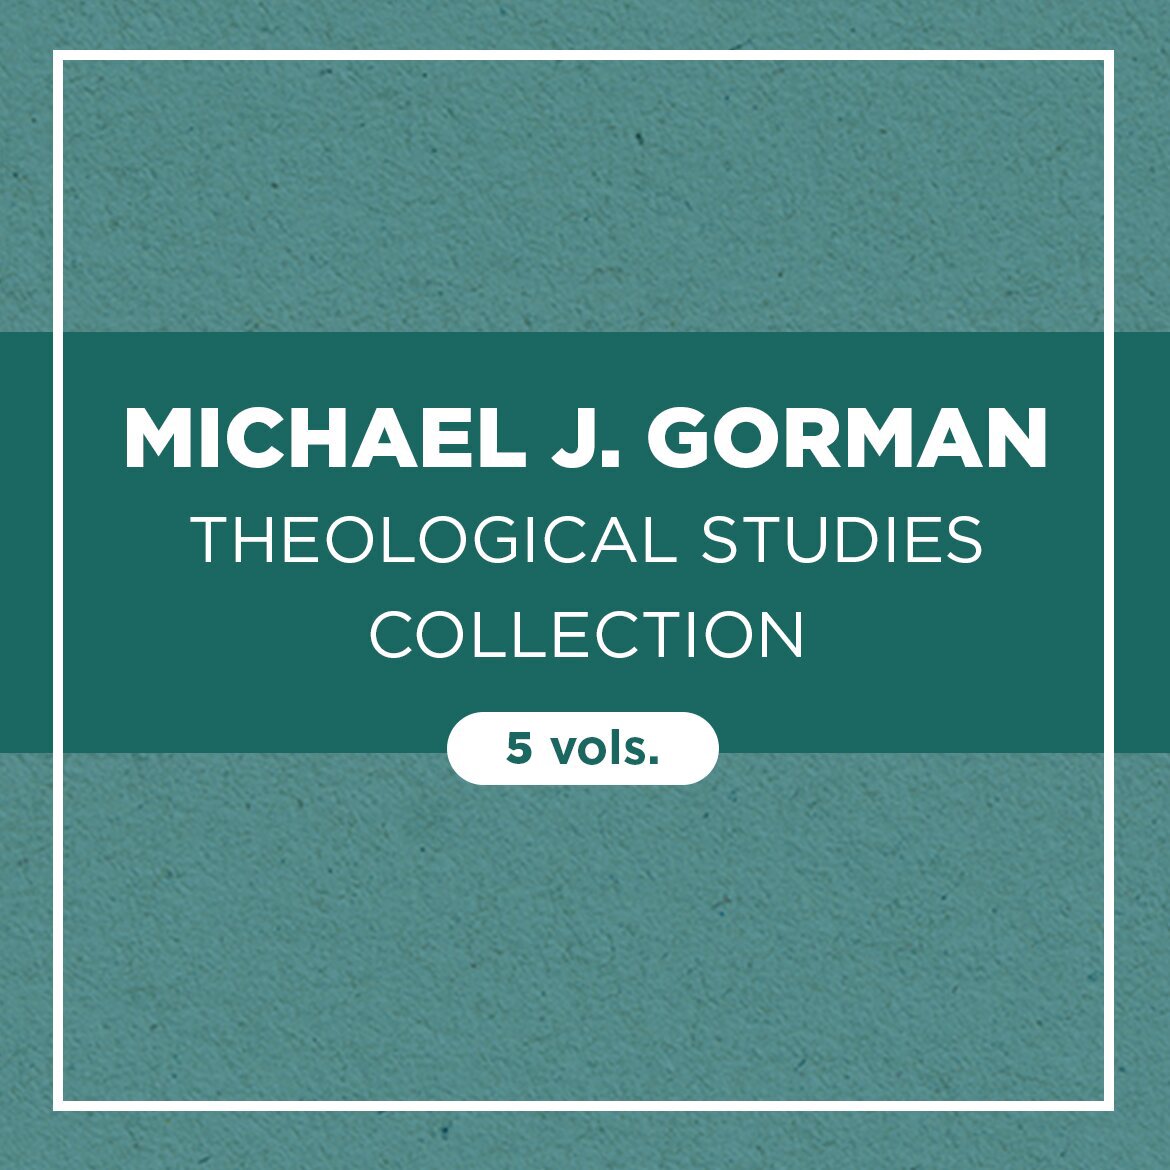 Michael J. Gorman Theological Studies Collection (5 vols.)